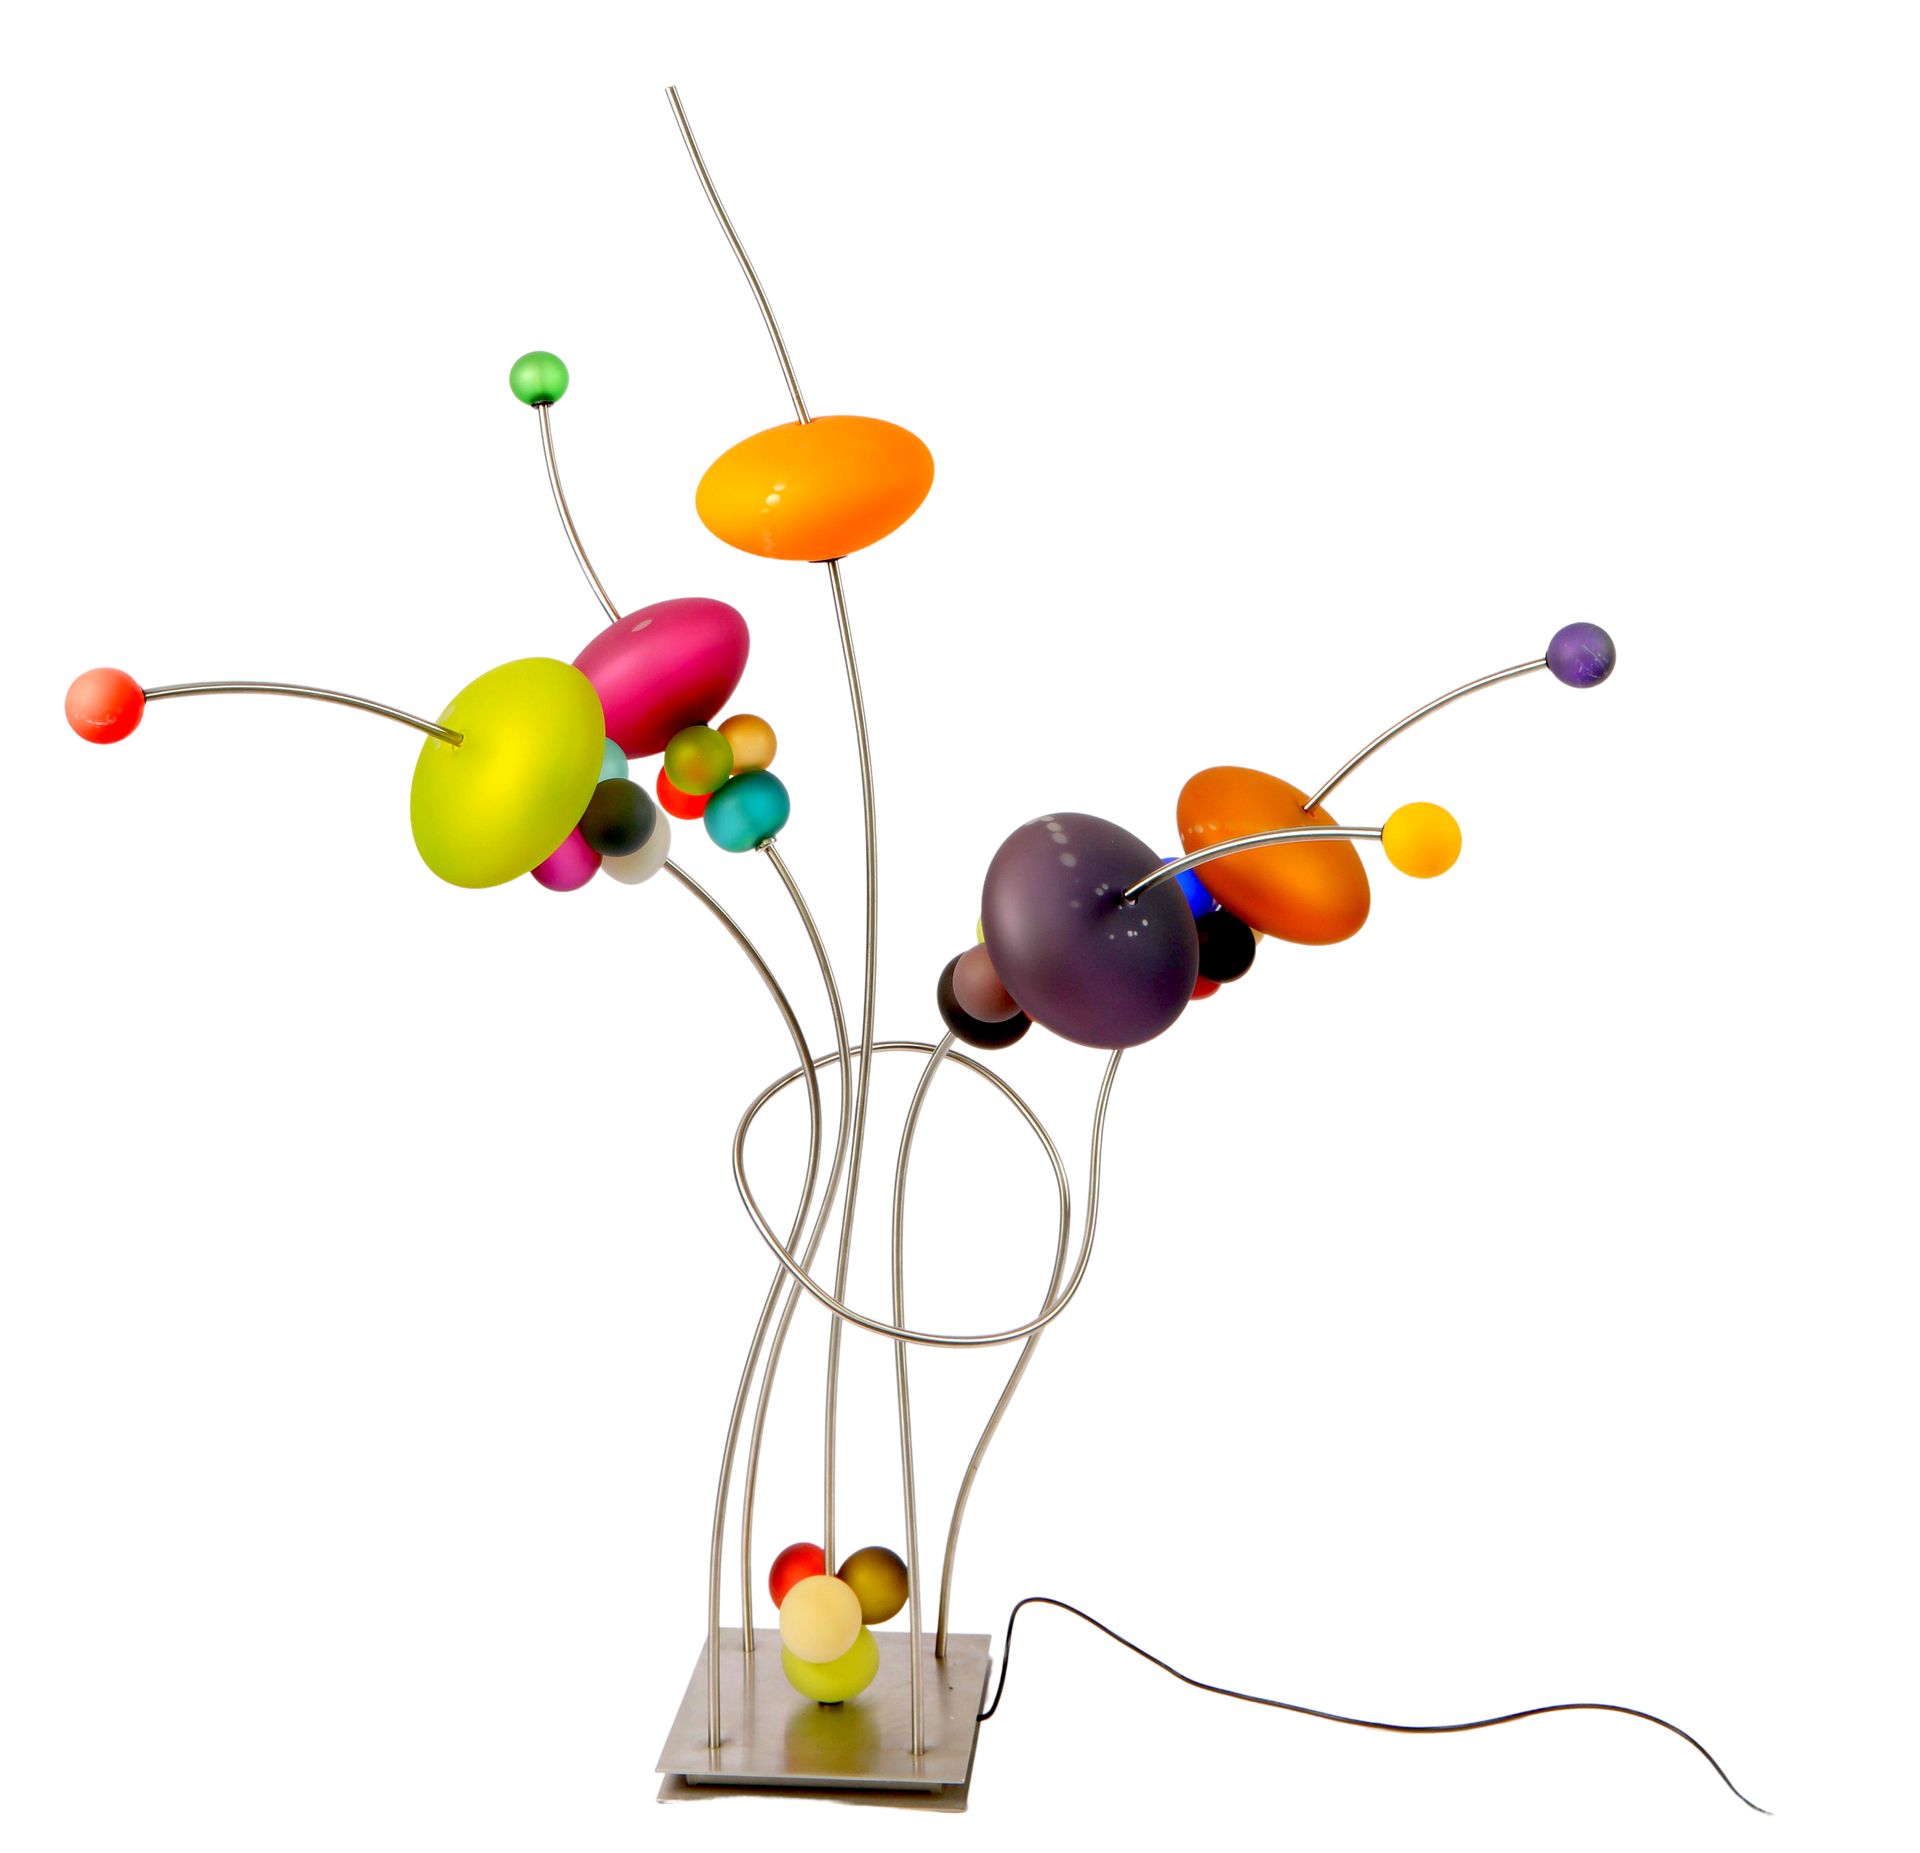 Null 
萨托尔-尼古拉，重要的落地灯，装饰有五个光臂和多色吹制的玻璃球，独特的作品。

"我的 "Globule "落地灯是具有维生素般色彩的设计物品。关机&hellip;